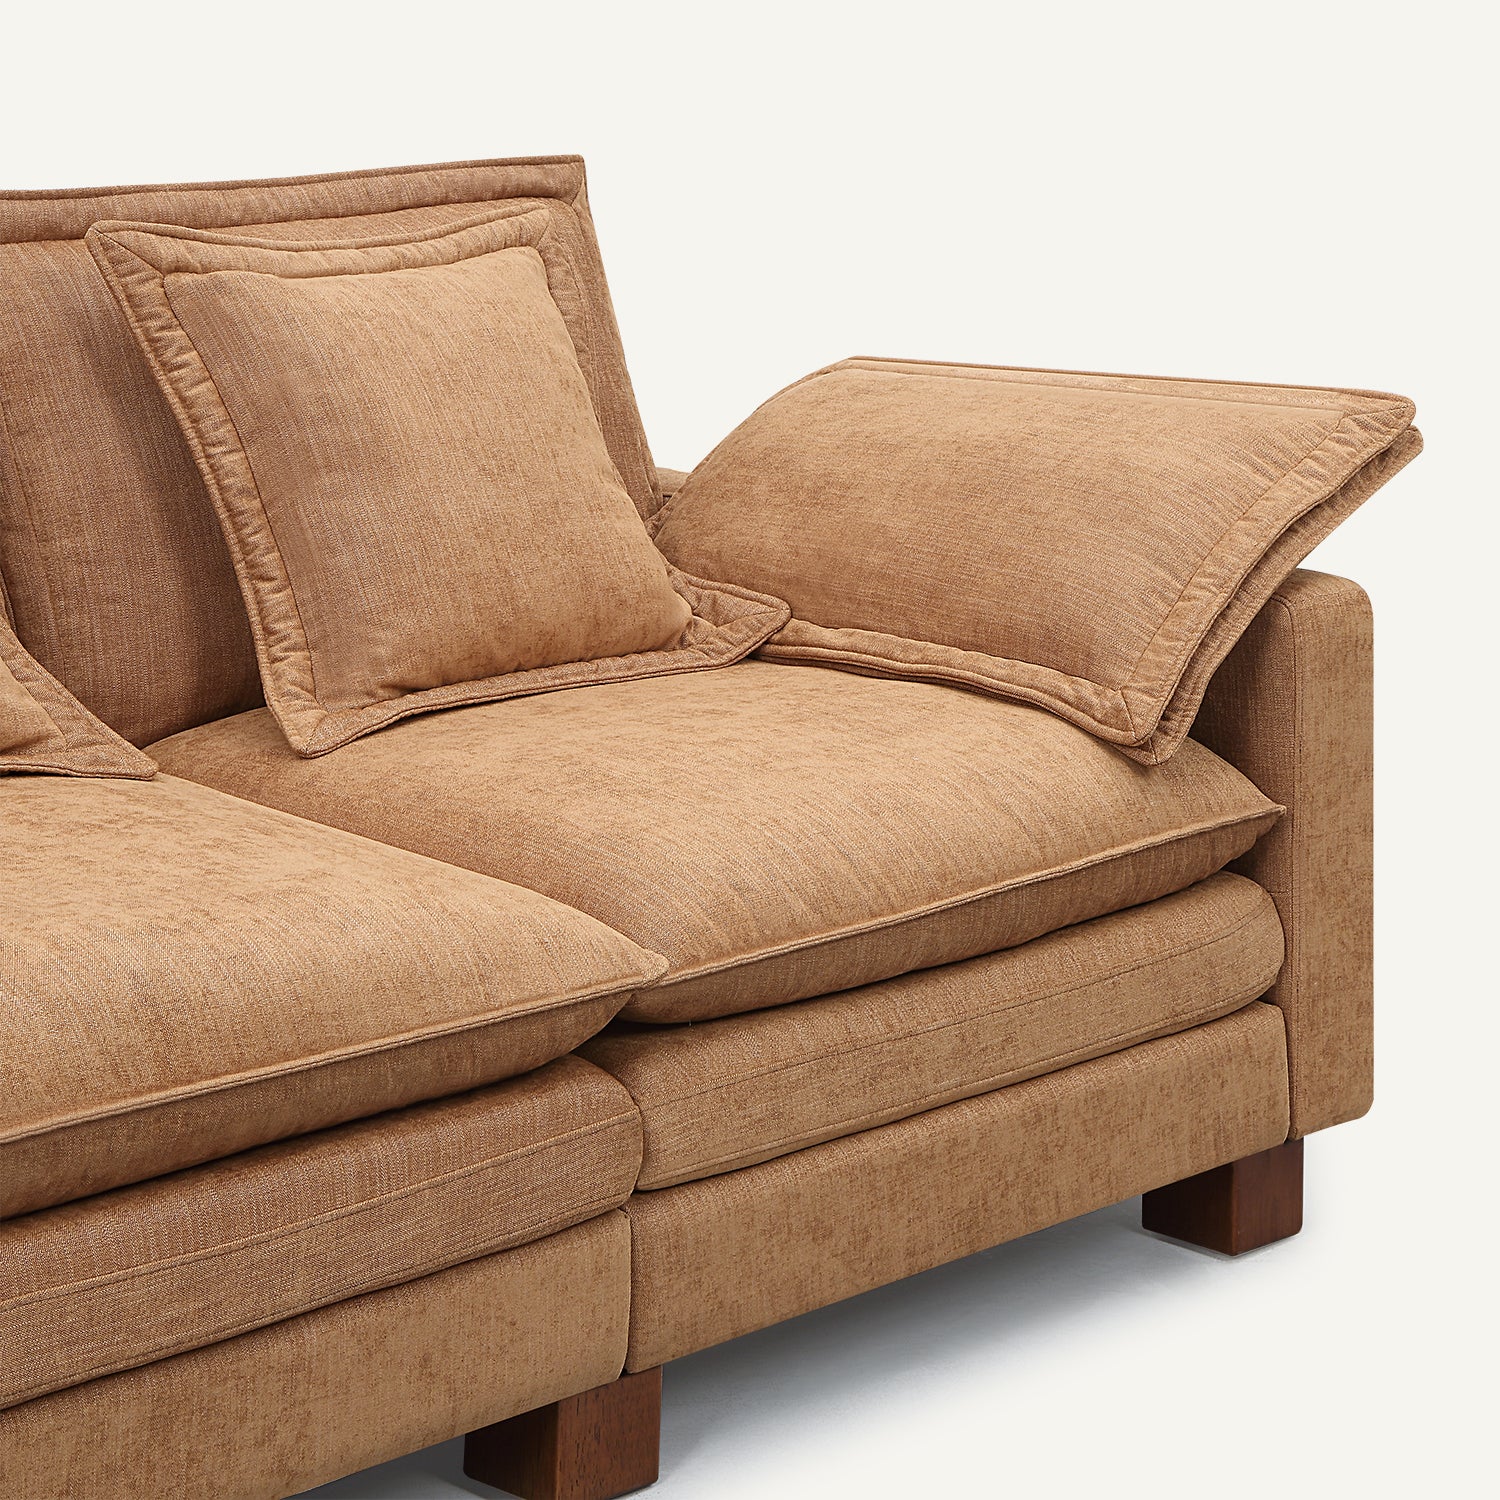 Stacked Tan Linen Fabric Custom Sectional Modular Sofa